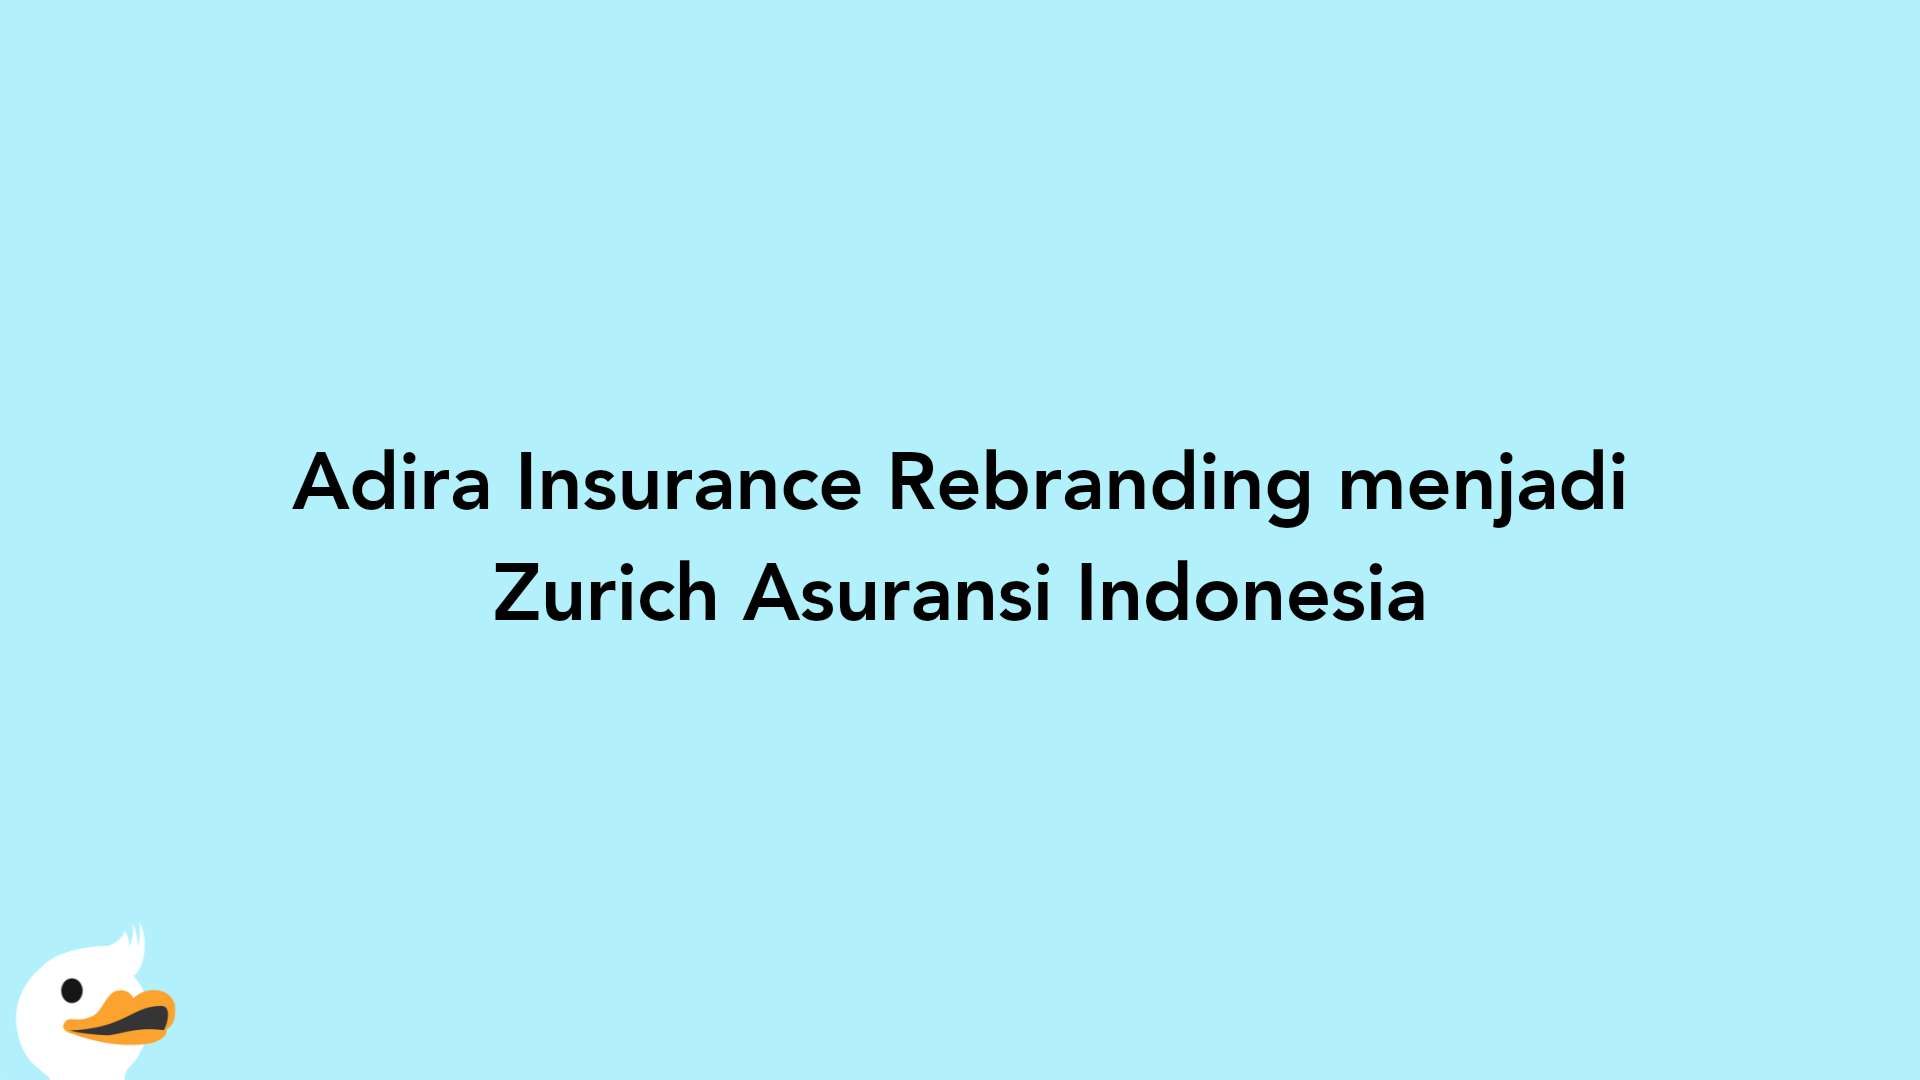 Adira Insurance Rebranding menjadi Zurich Asuransi Indonesia